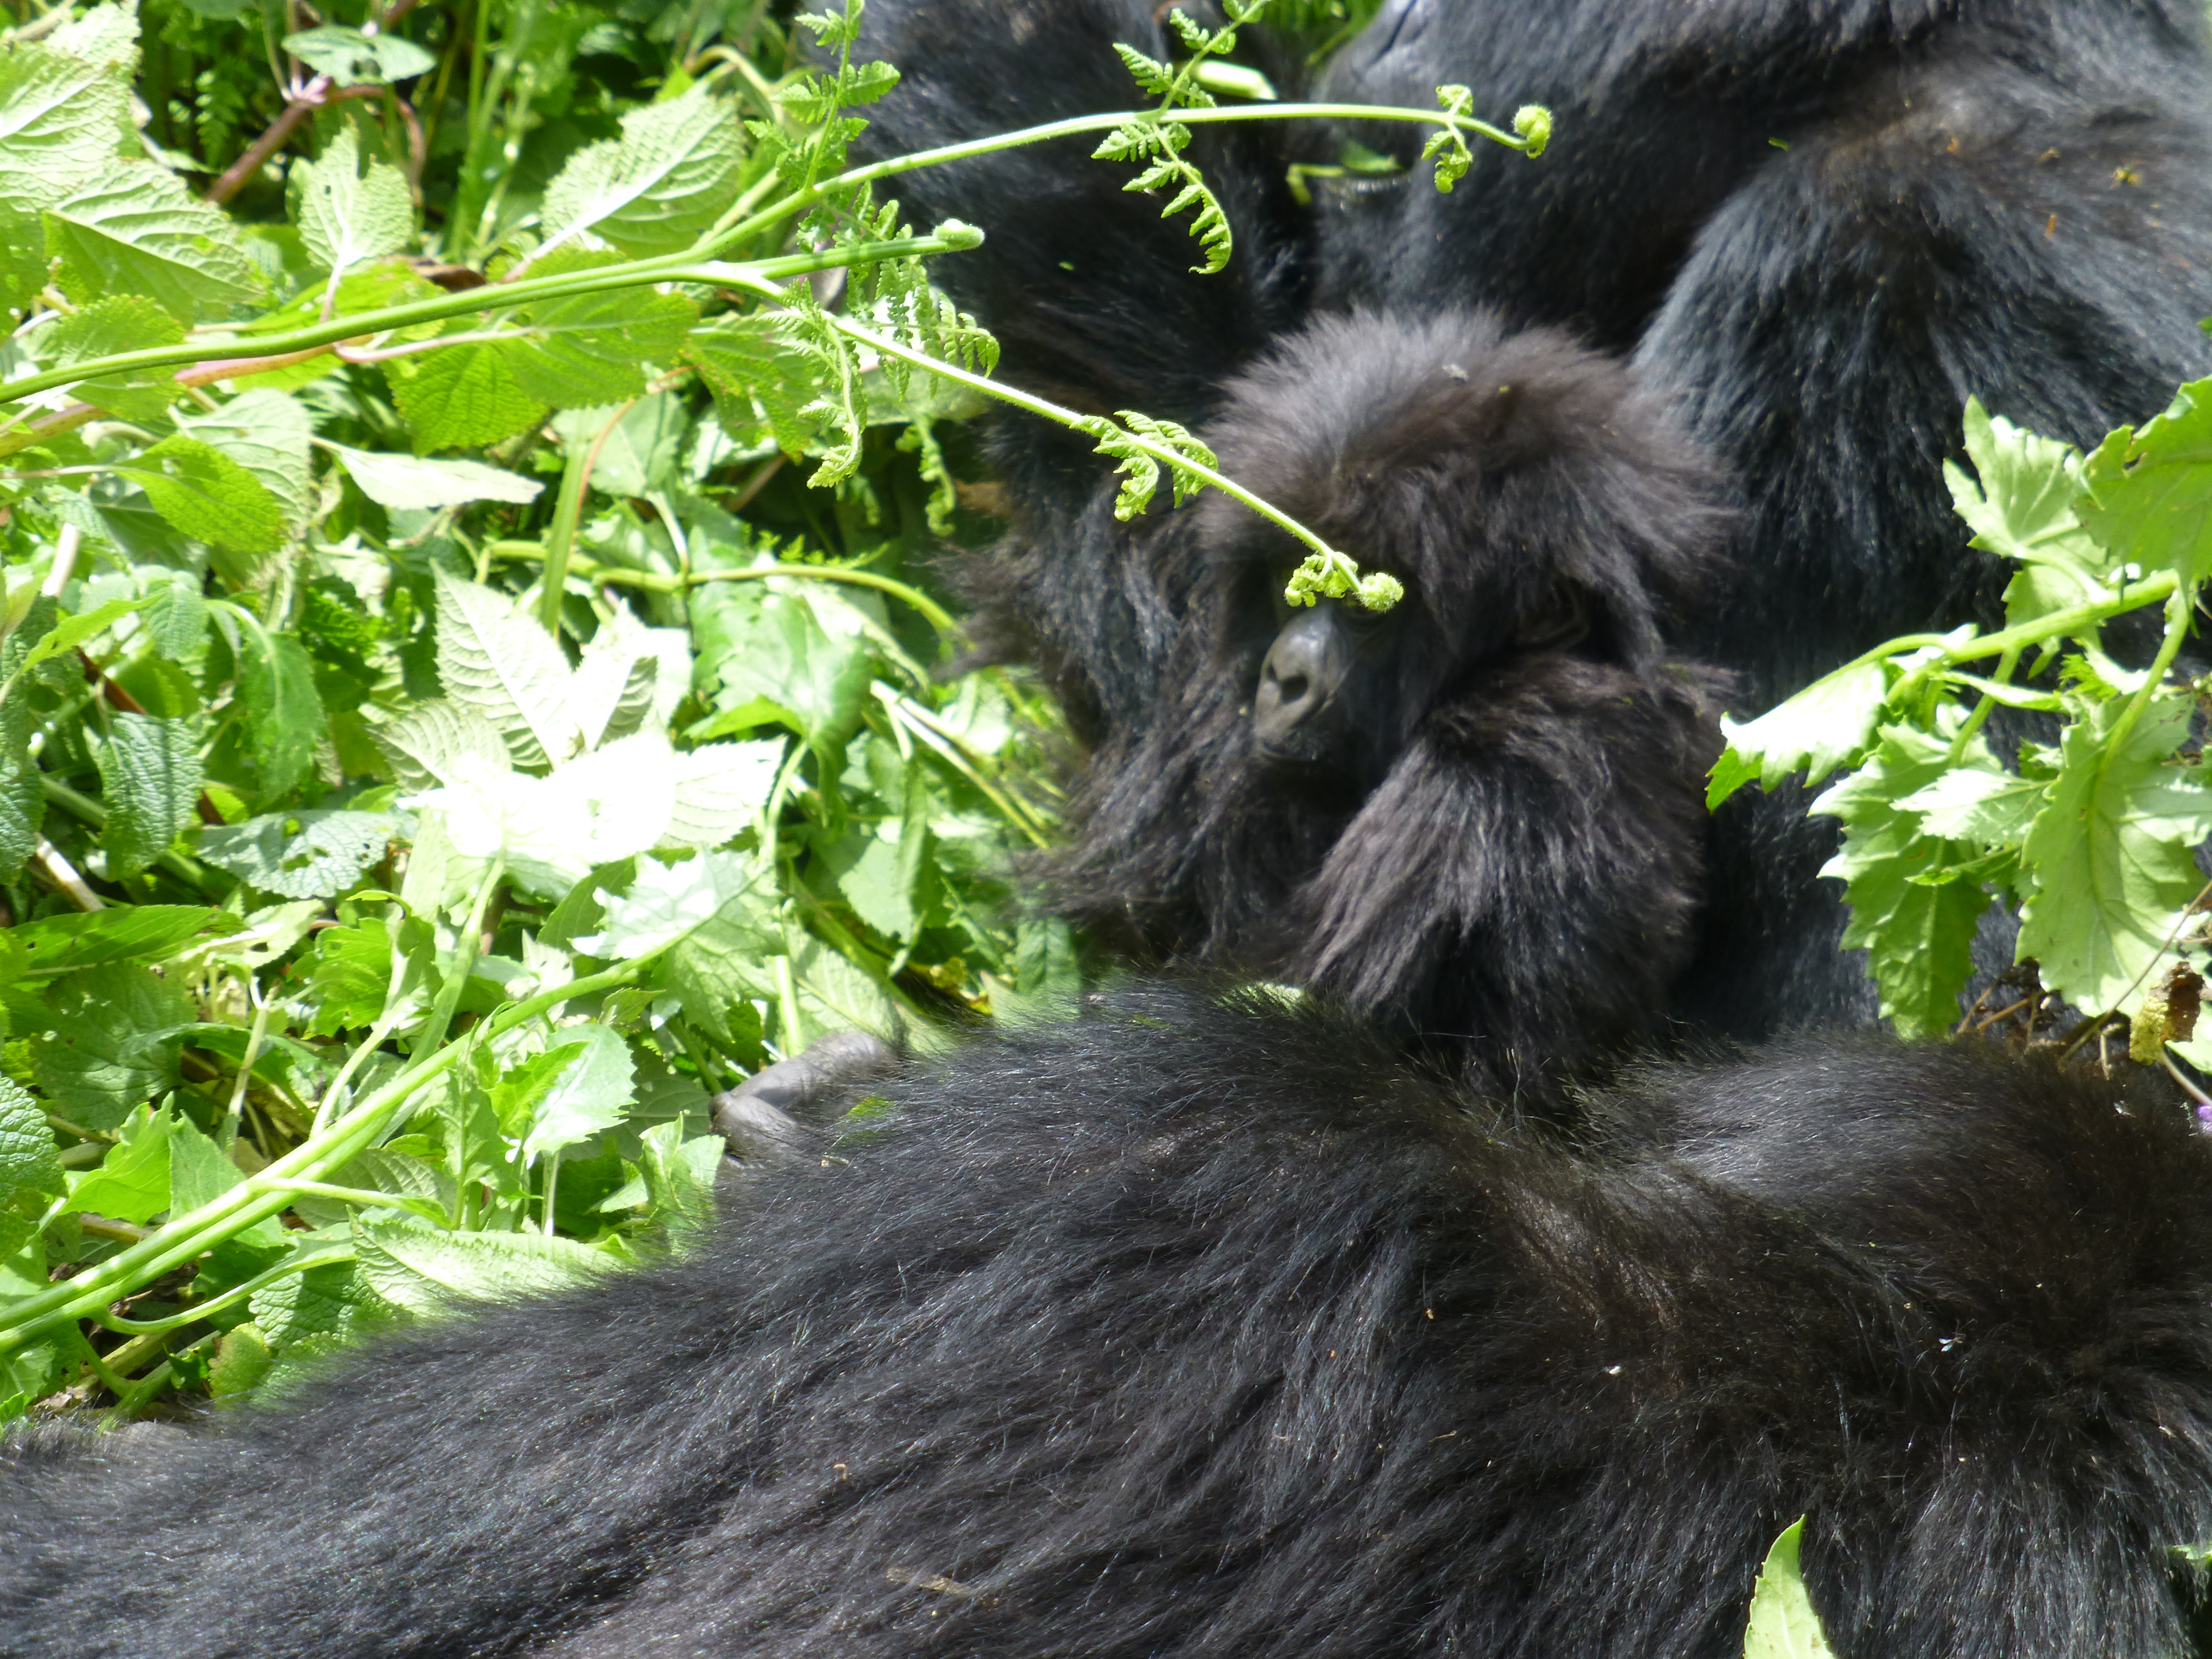 Gorilla trekking safaris in Bwindi Impenetrable National Park